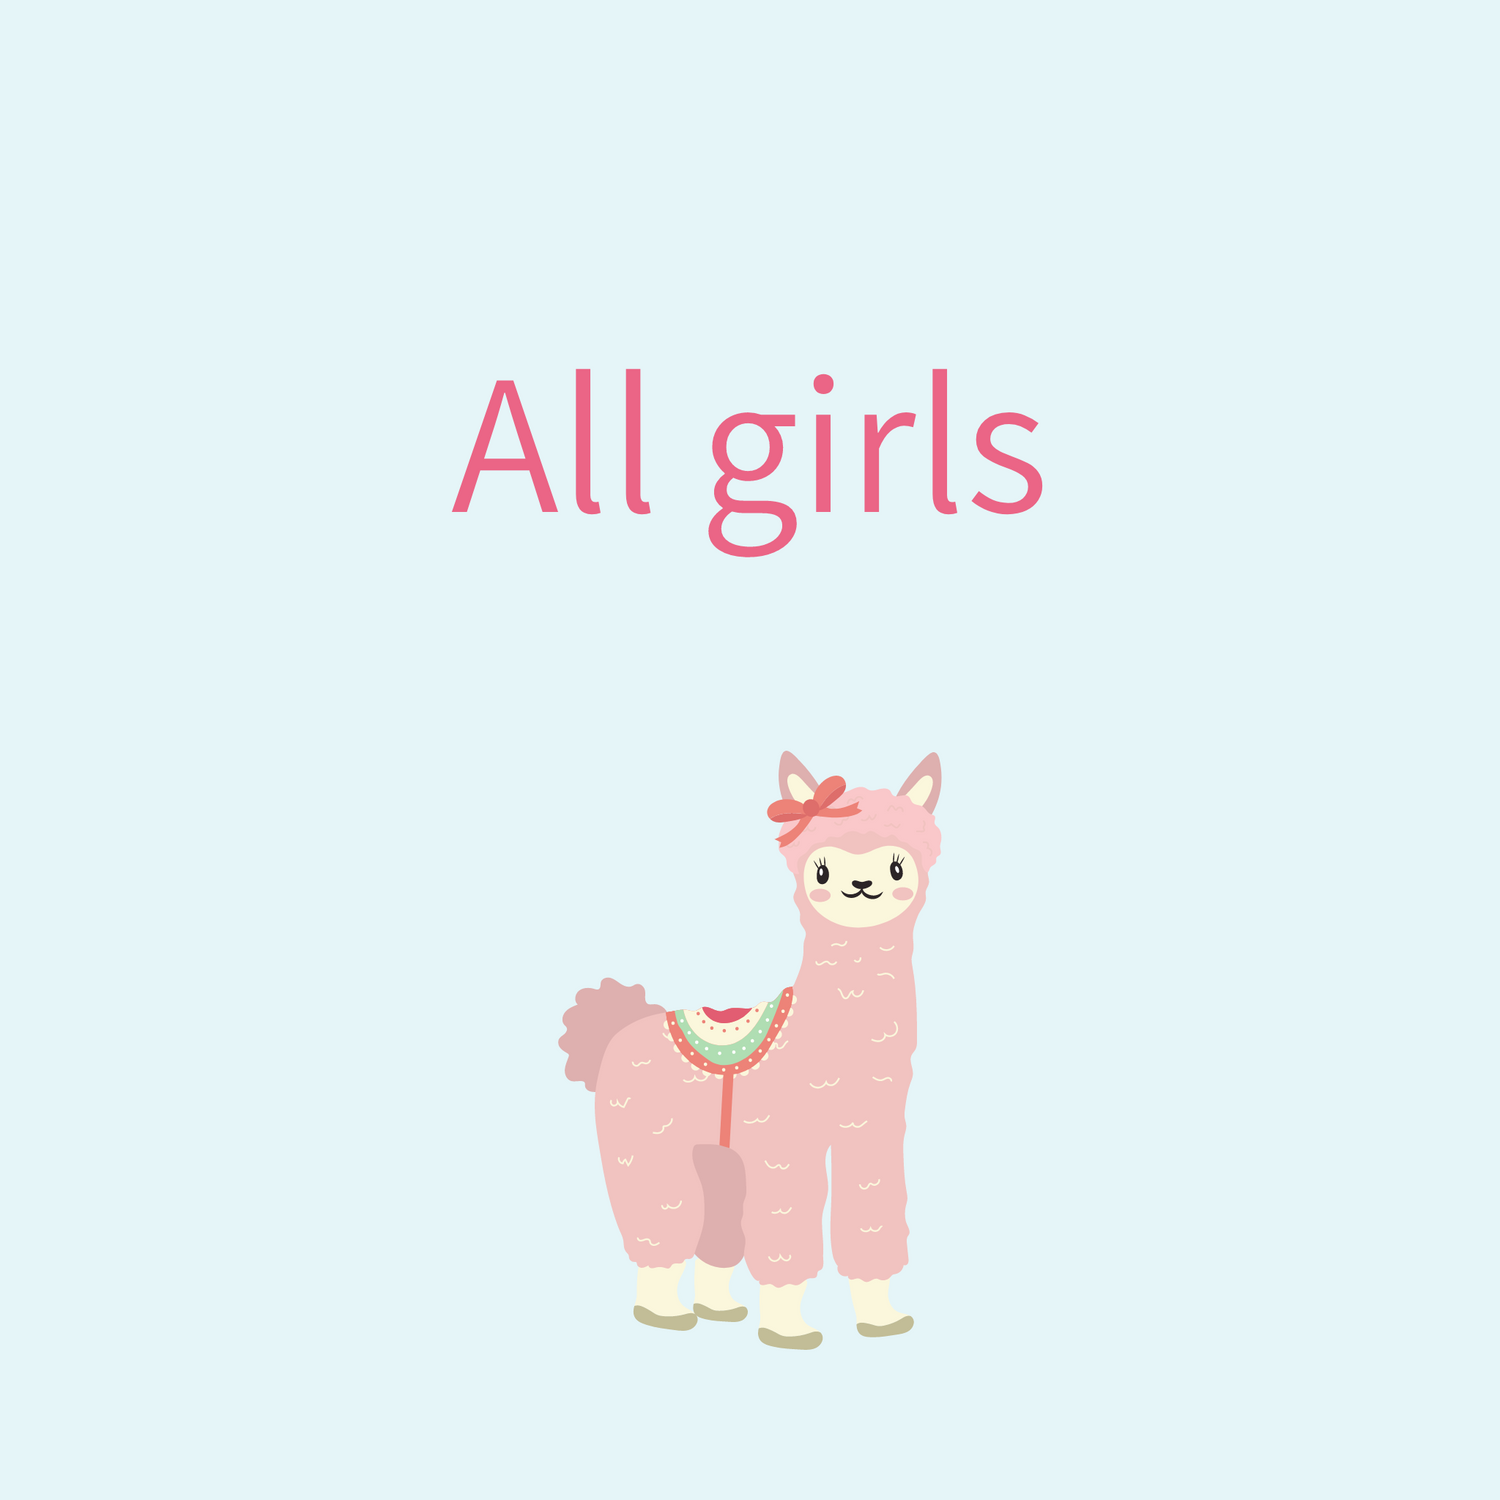 All girls